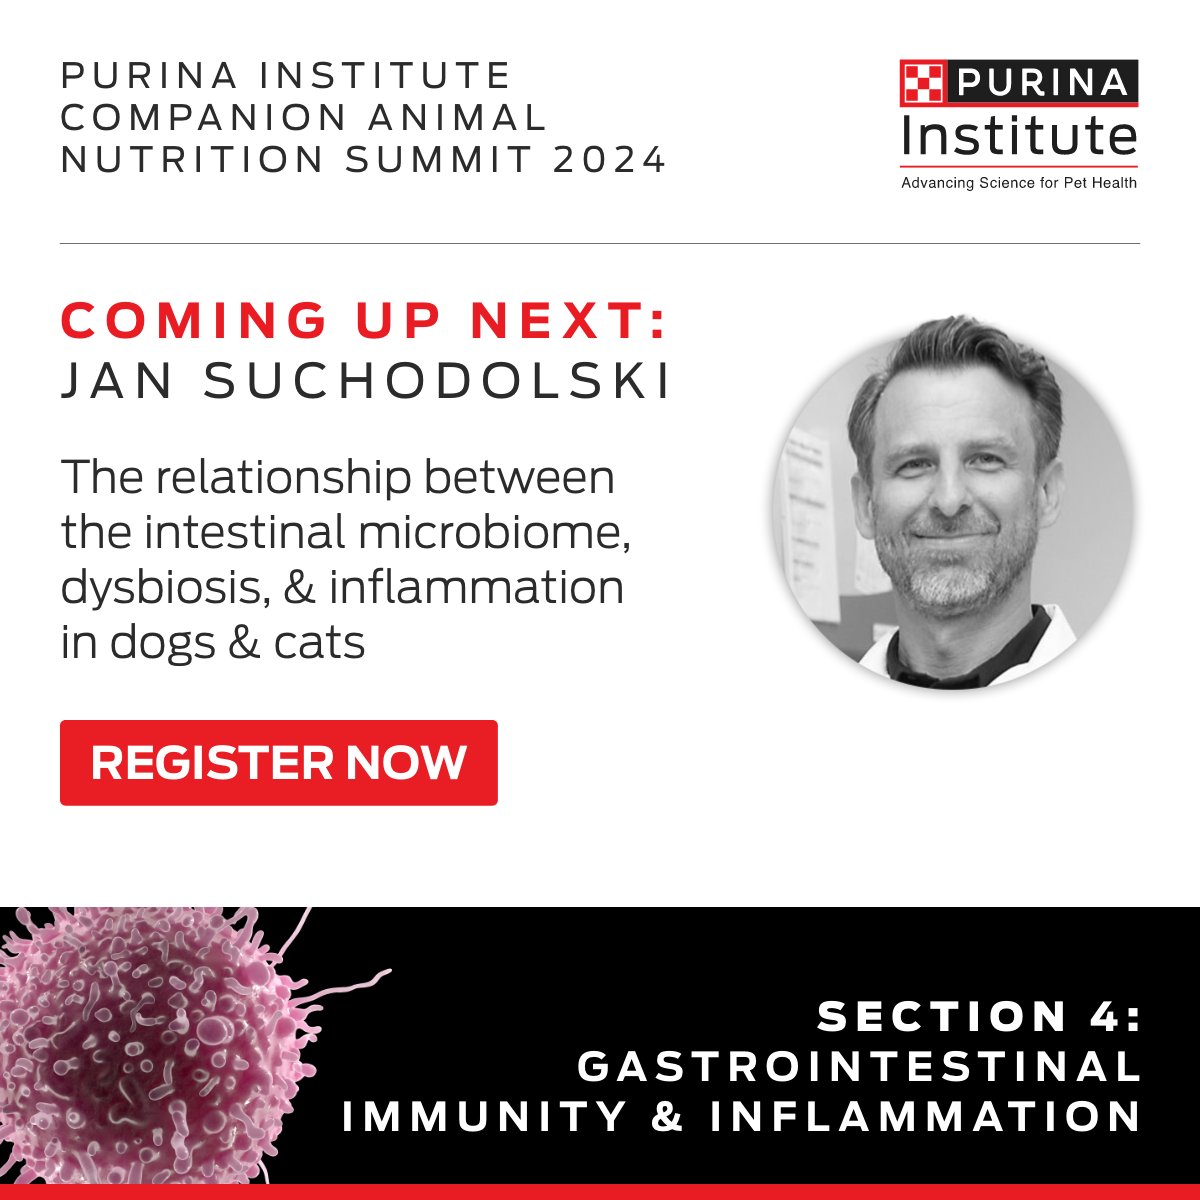 Jan Suchodolski, MedVet, DrVetMed, PhD, AGAF, DACVM presents next at #CANSummit2024 on the relationship between the intestinal microbiome, dysbiosis & inflammation spr.ly/6180wjWsQ #Veterinary #inflammation #microbiome @OSUVetCollege @tamuvetmed @ufvetmed @CSUVetMedBioSci